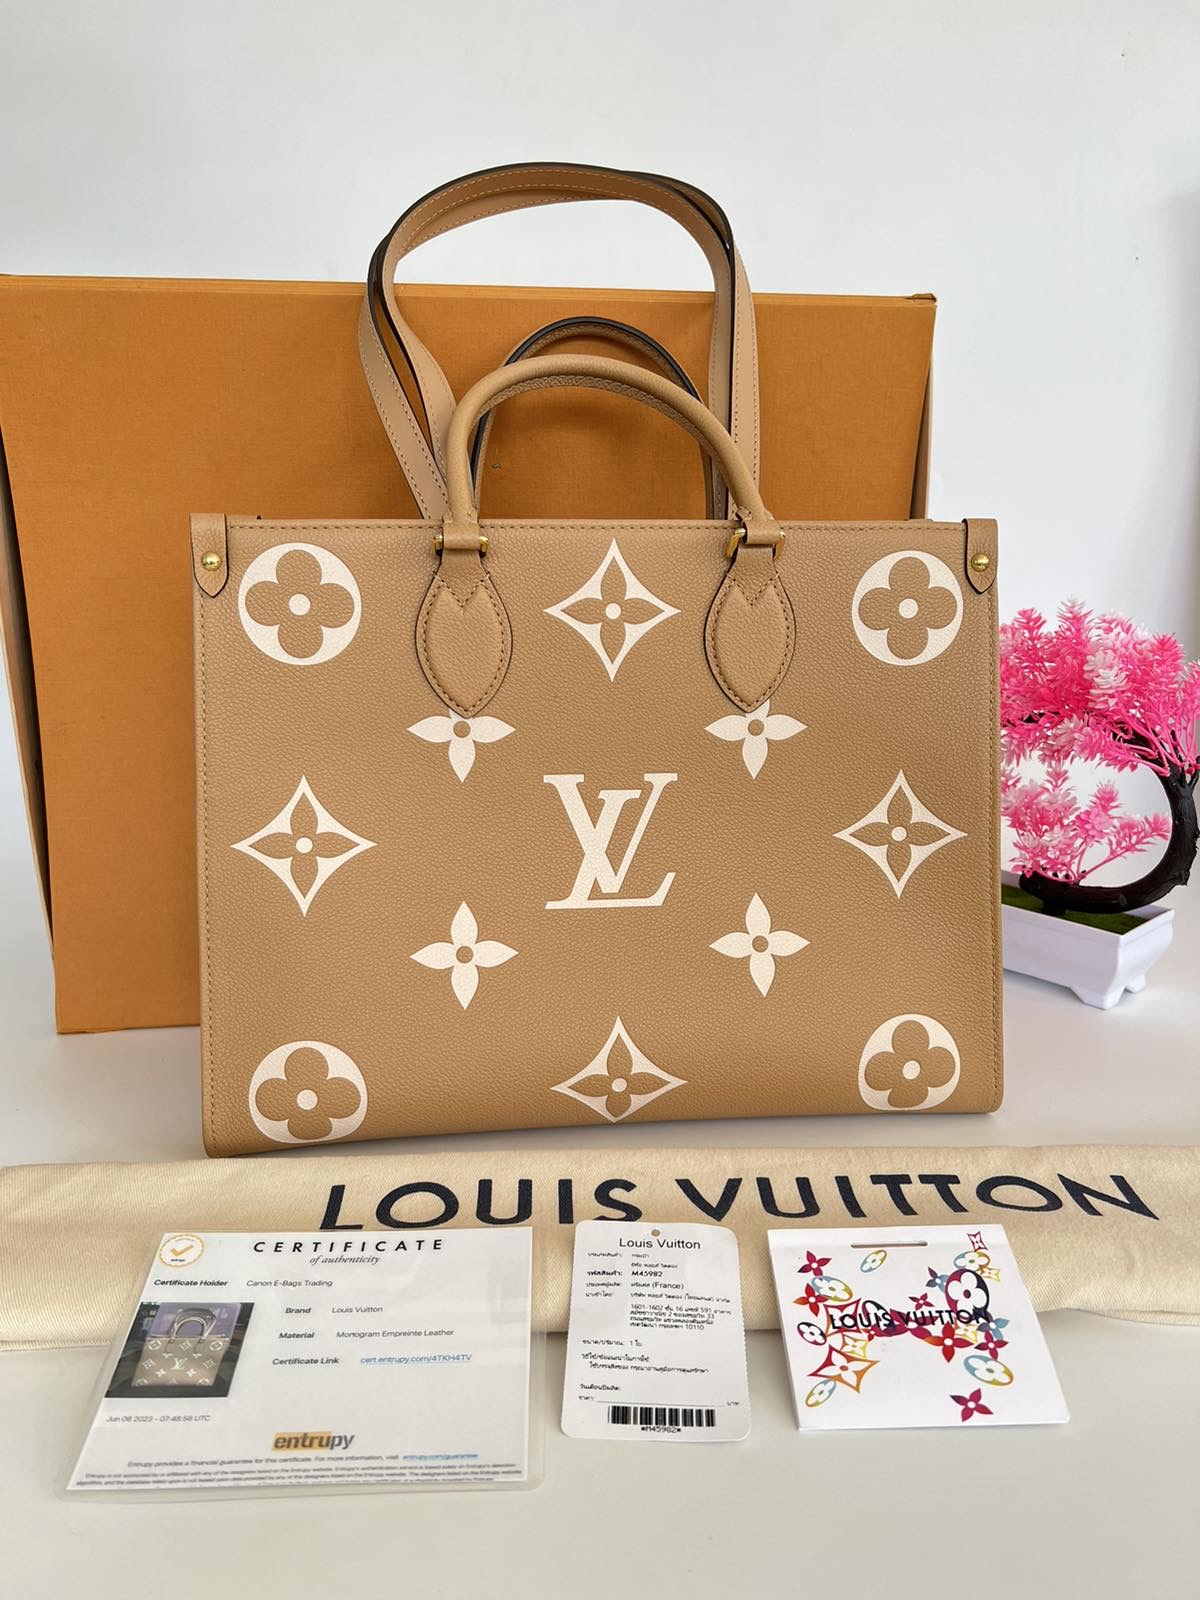 Louis Vuitton Monogram Canvas Lockit. DC: CA0056. Made in Spain